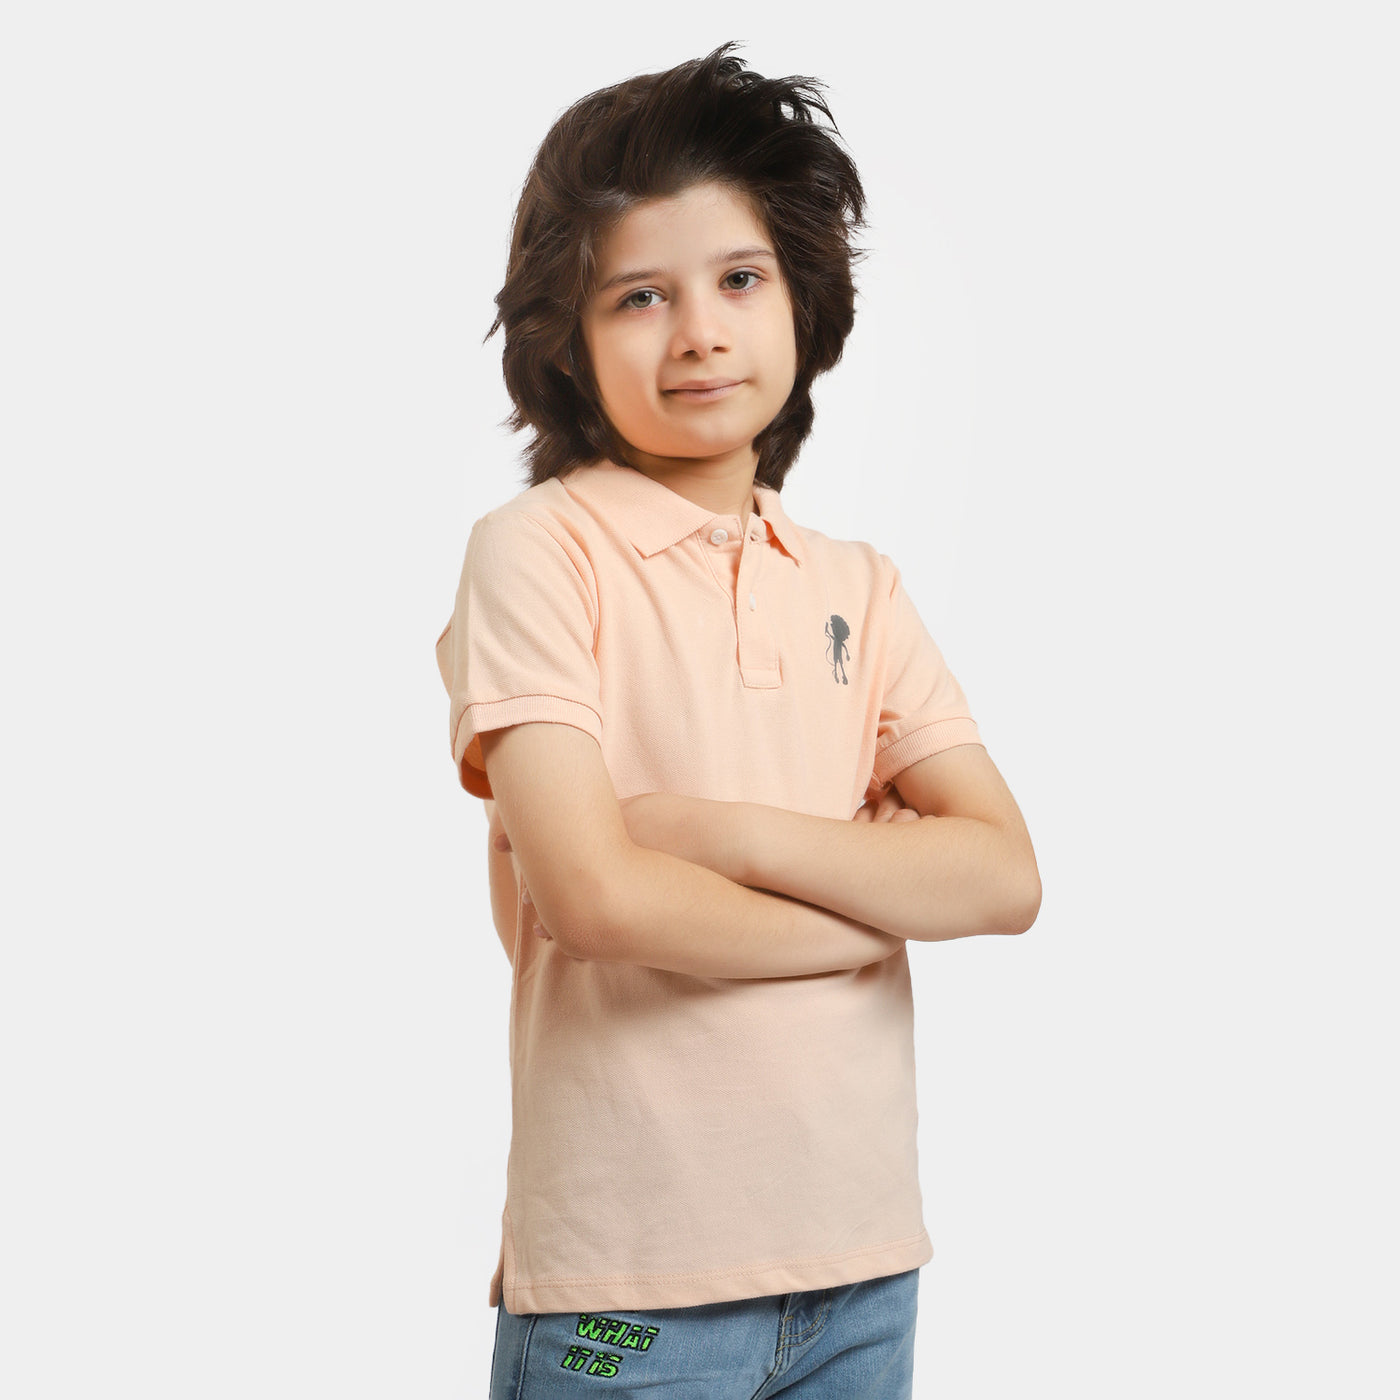 Boys Cotton Polo Basic T-Shirt - Scallop